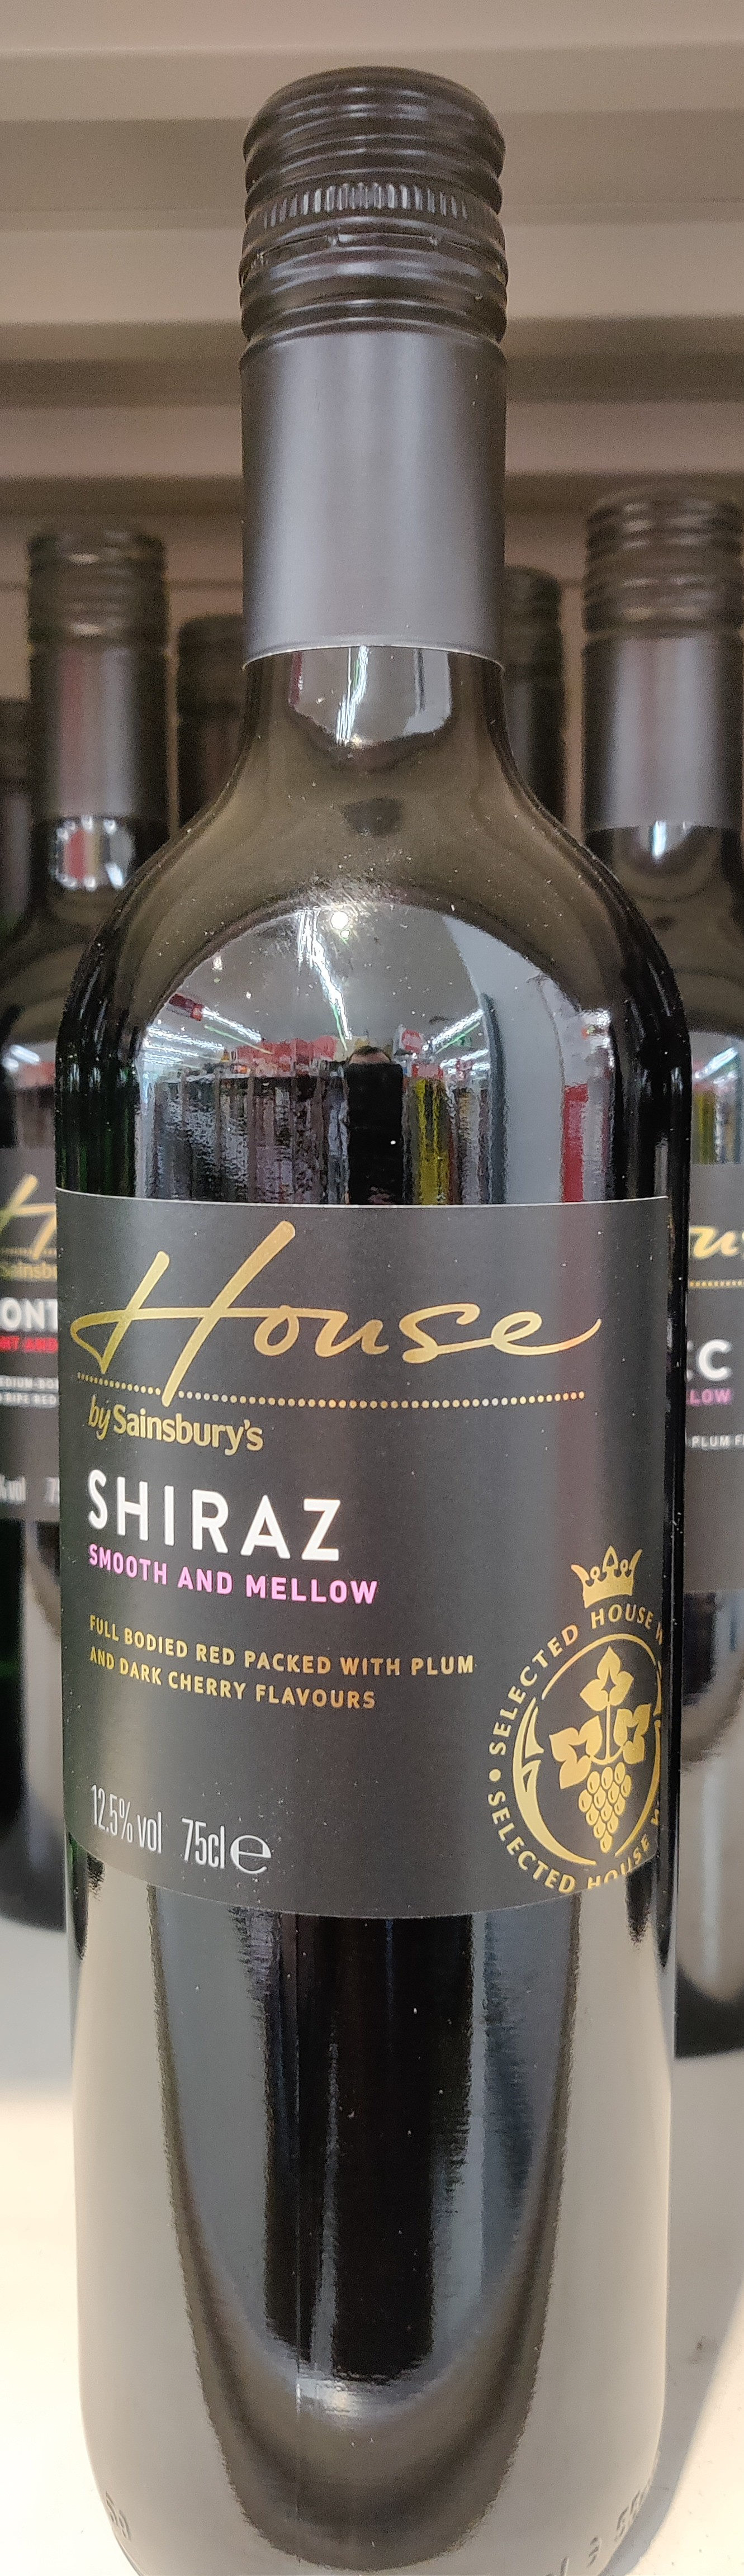 Shiraz - Product